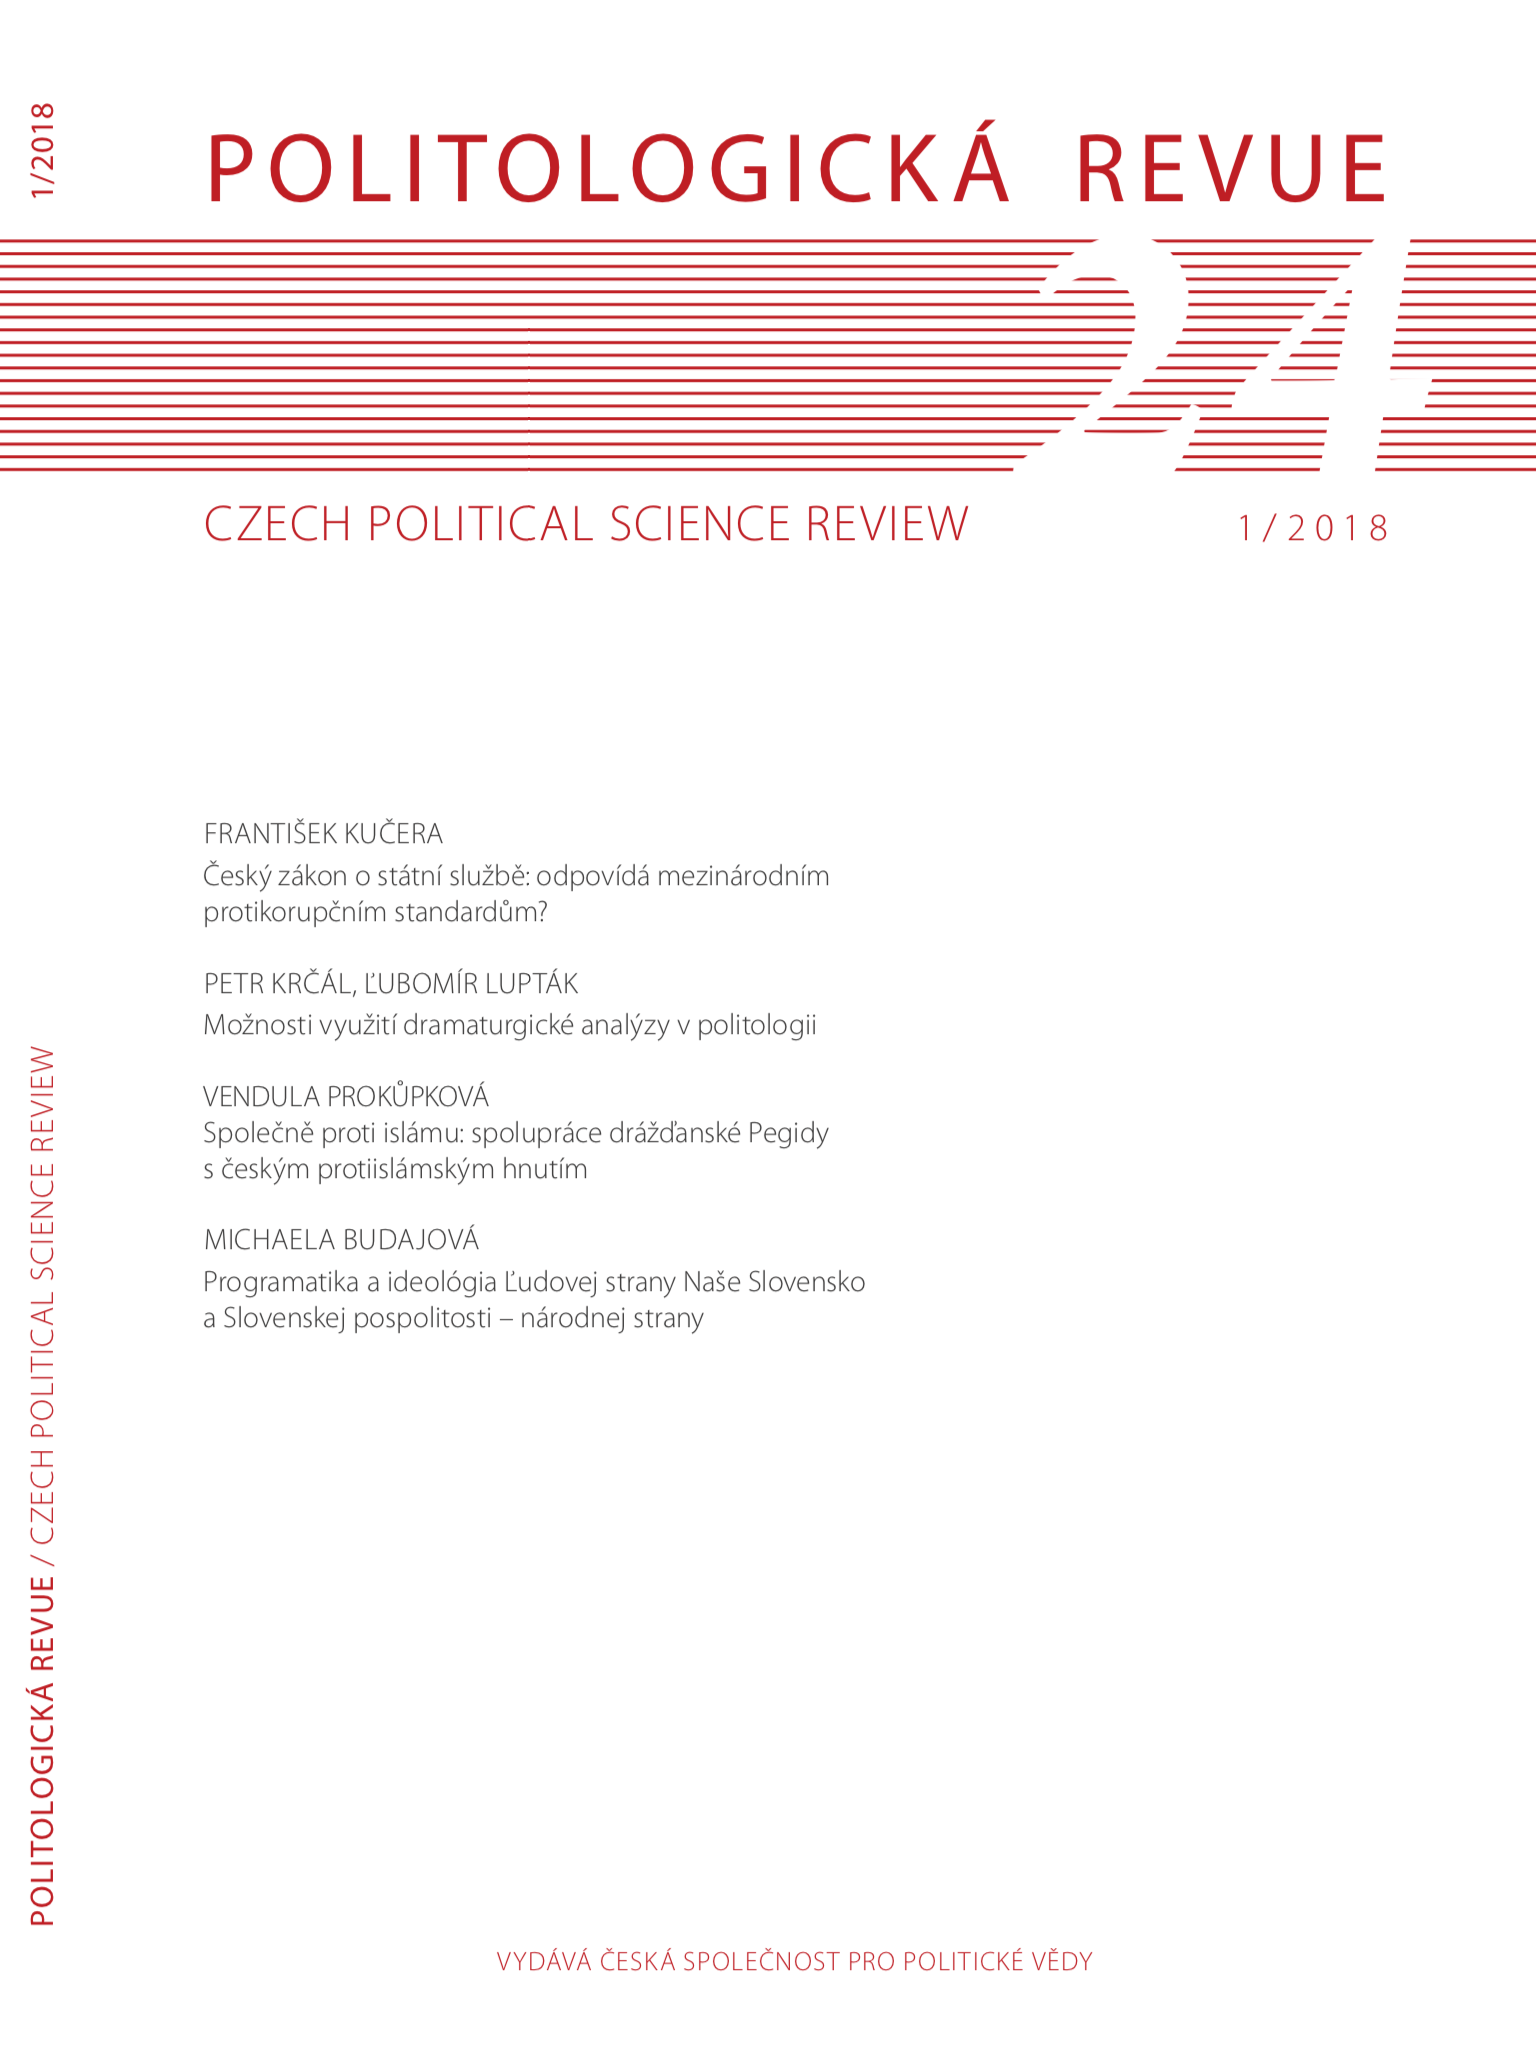 Czech Civil Service Act Cover Image